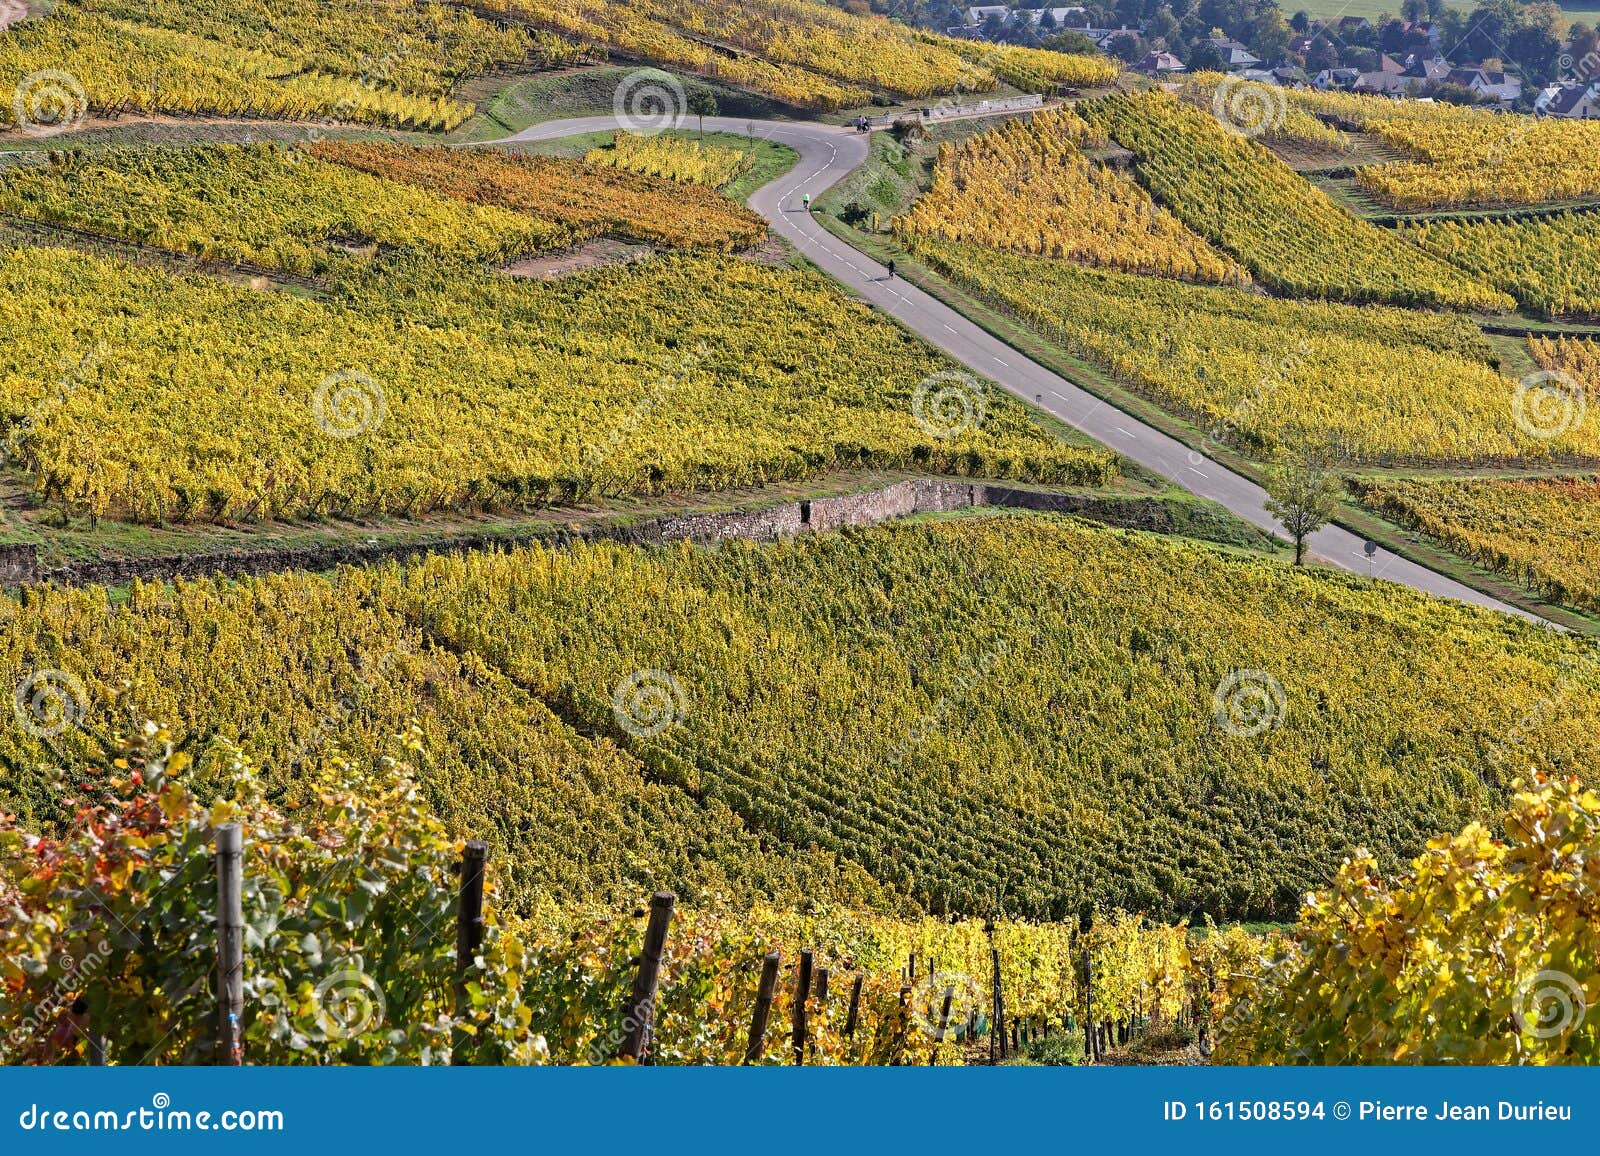 the route des vins winds between vineyards